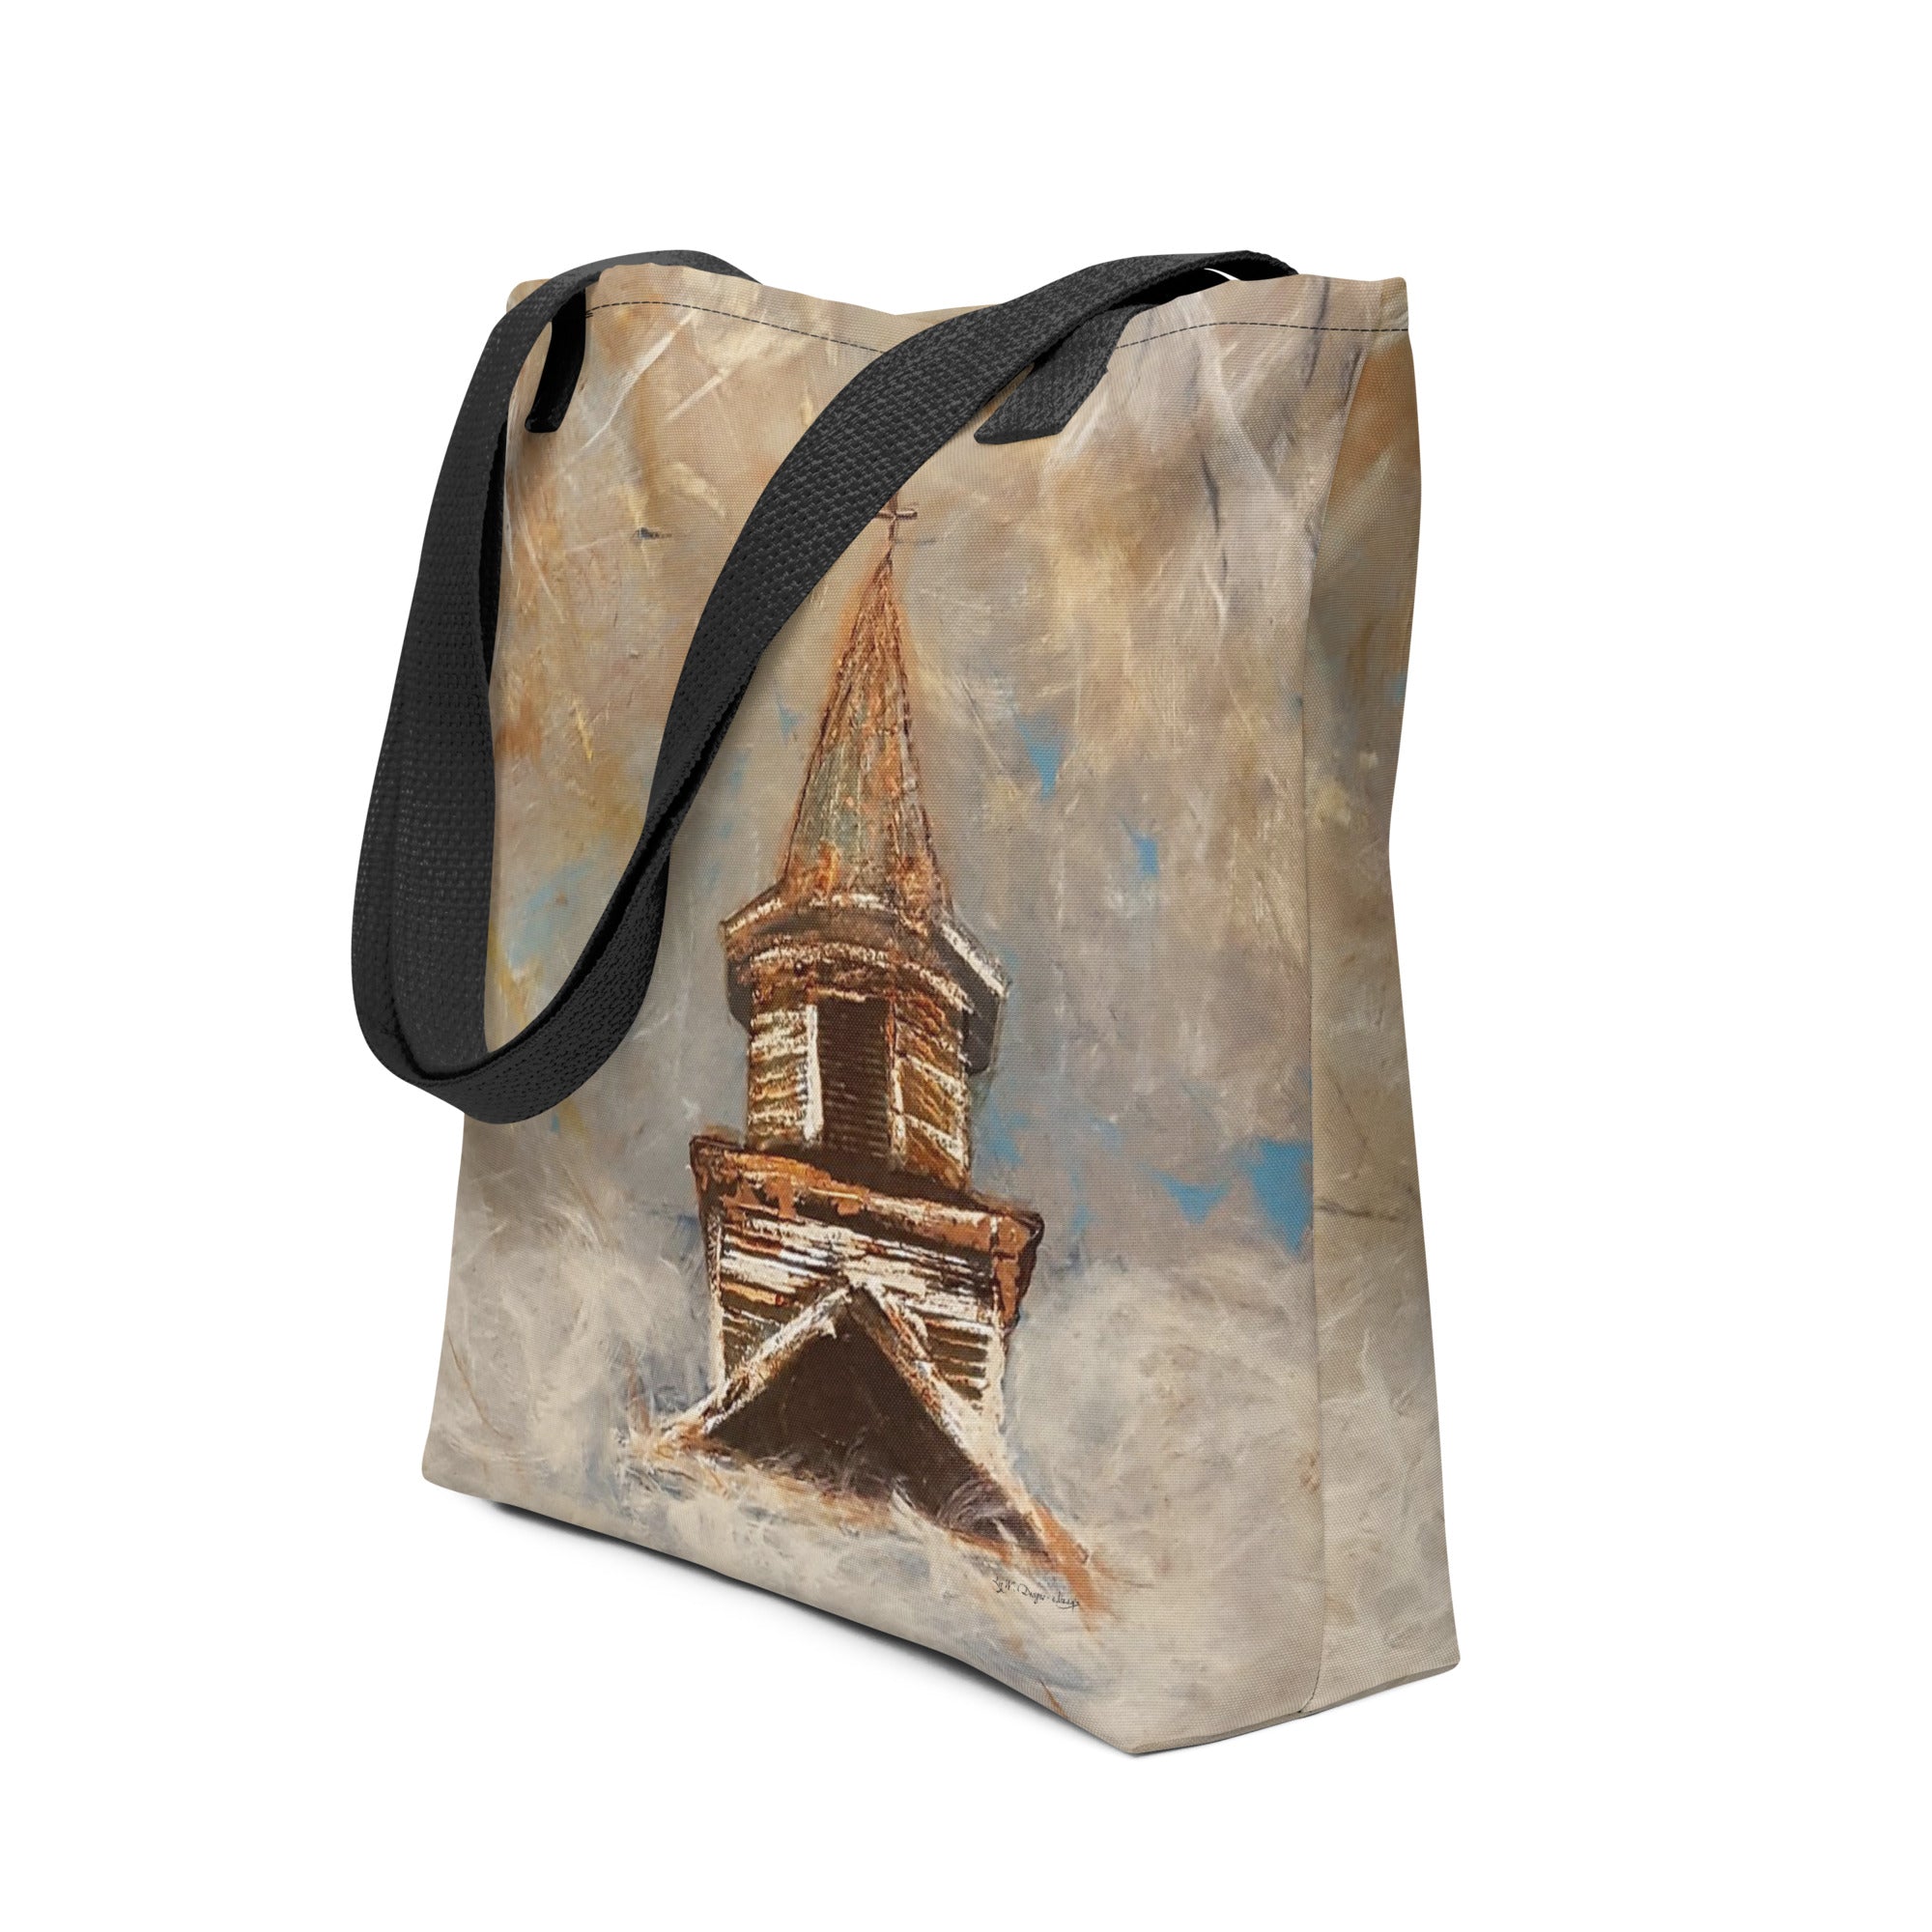 Steeple on the Horizon I - Artful Tote Bag